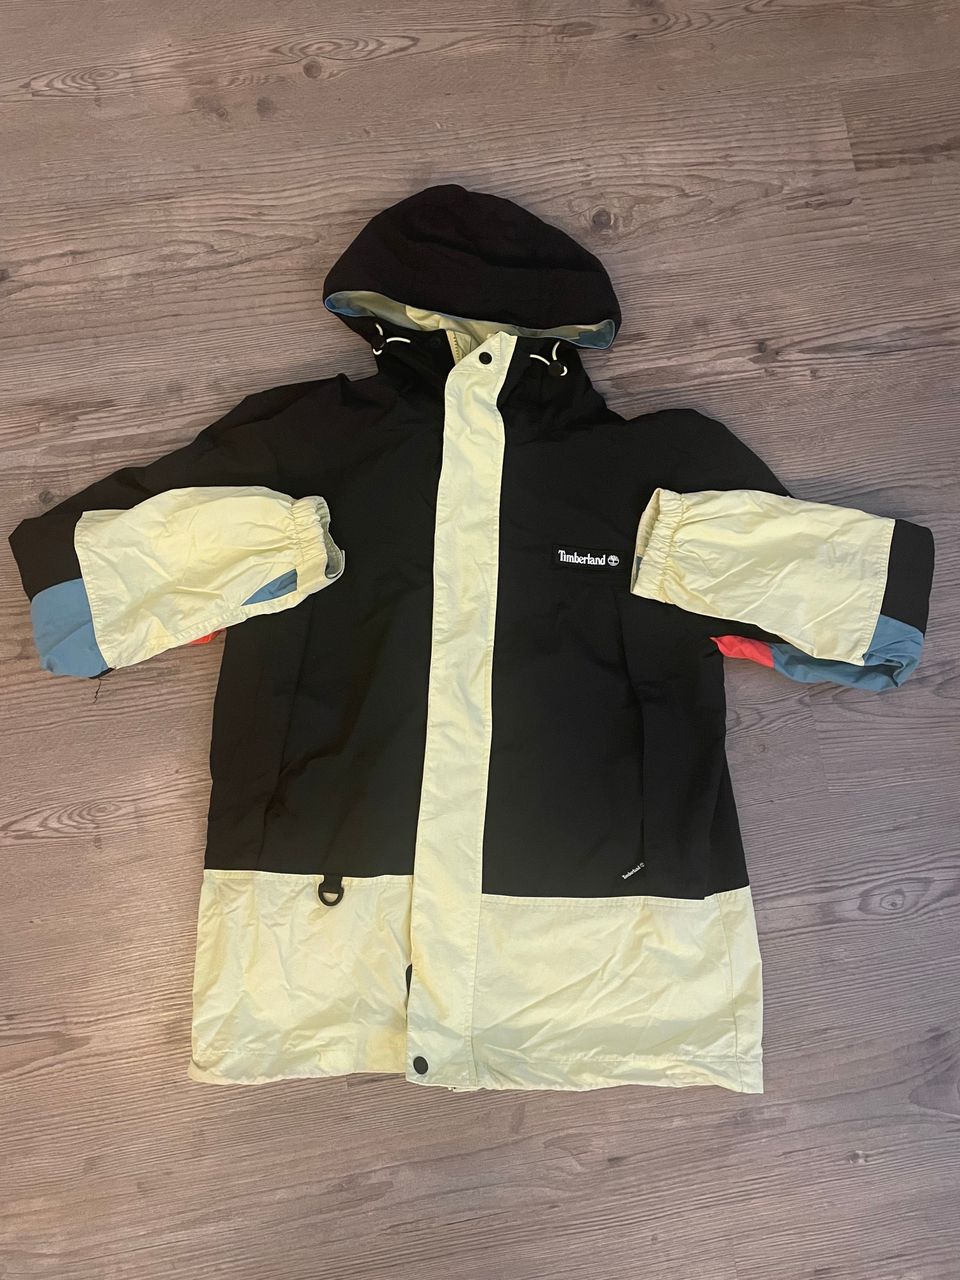 Ulkoilutakki (outdoor jacket) - Timberland (M)